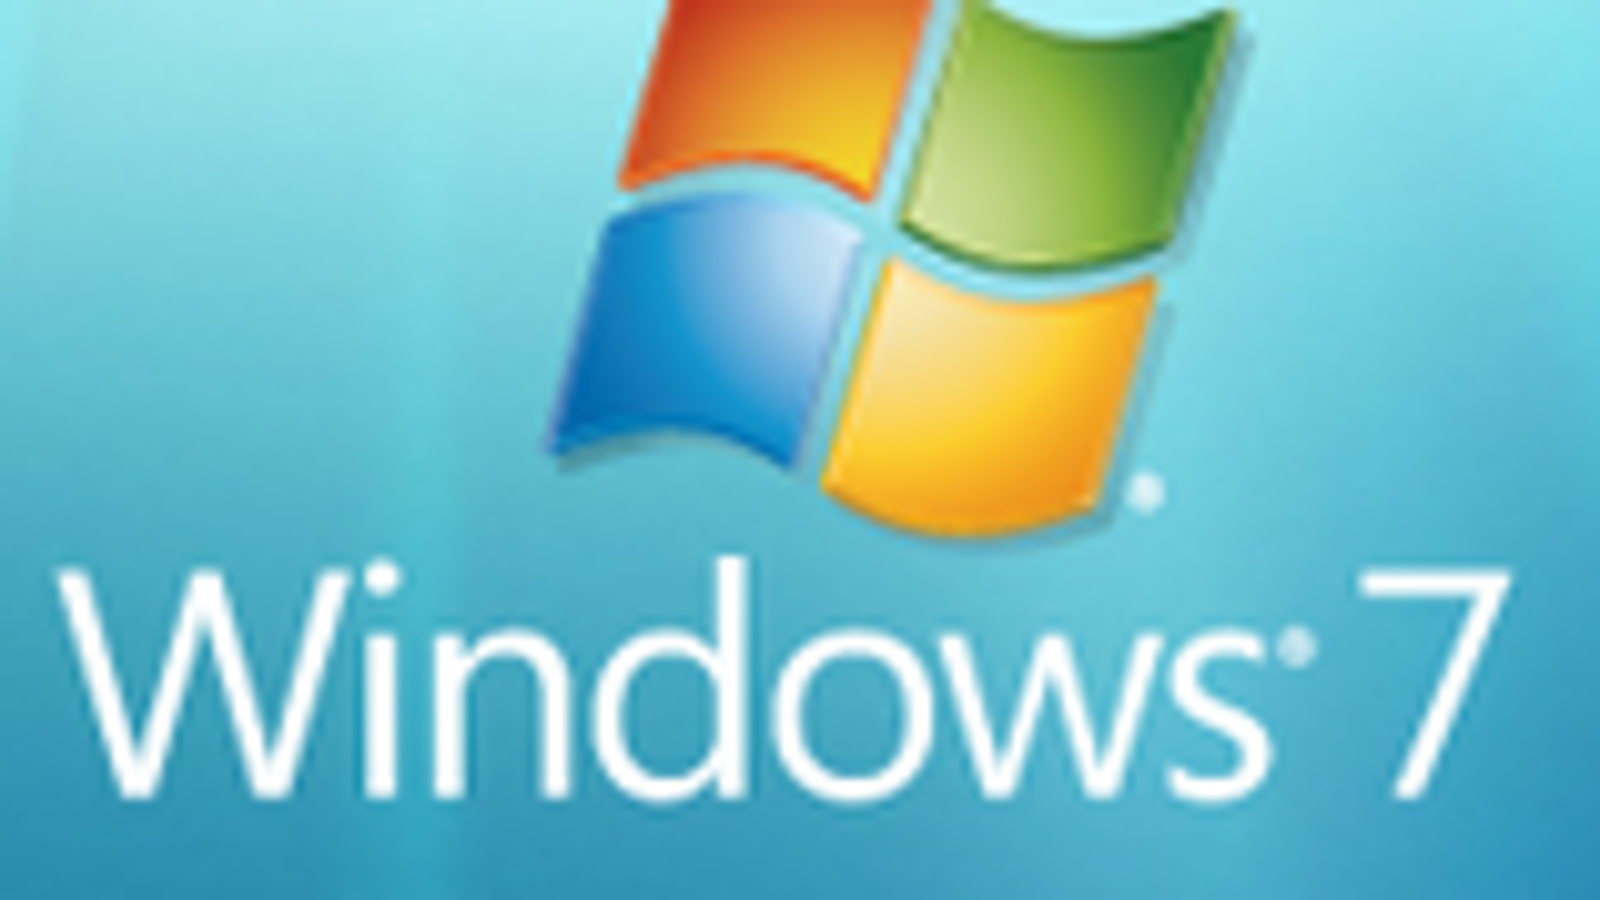 windows 7 date of release